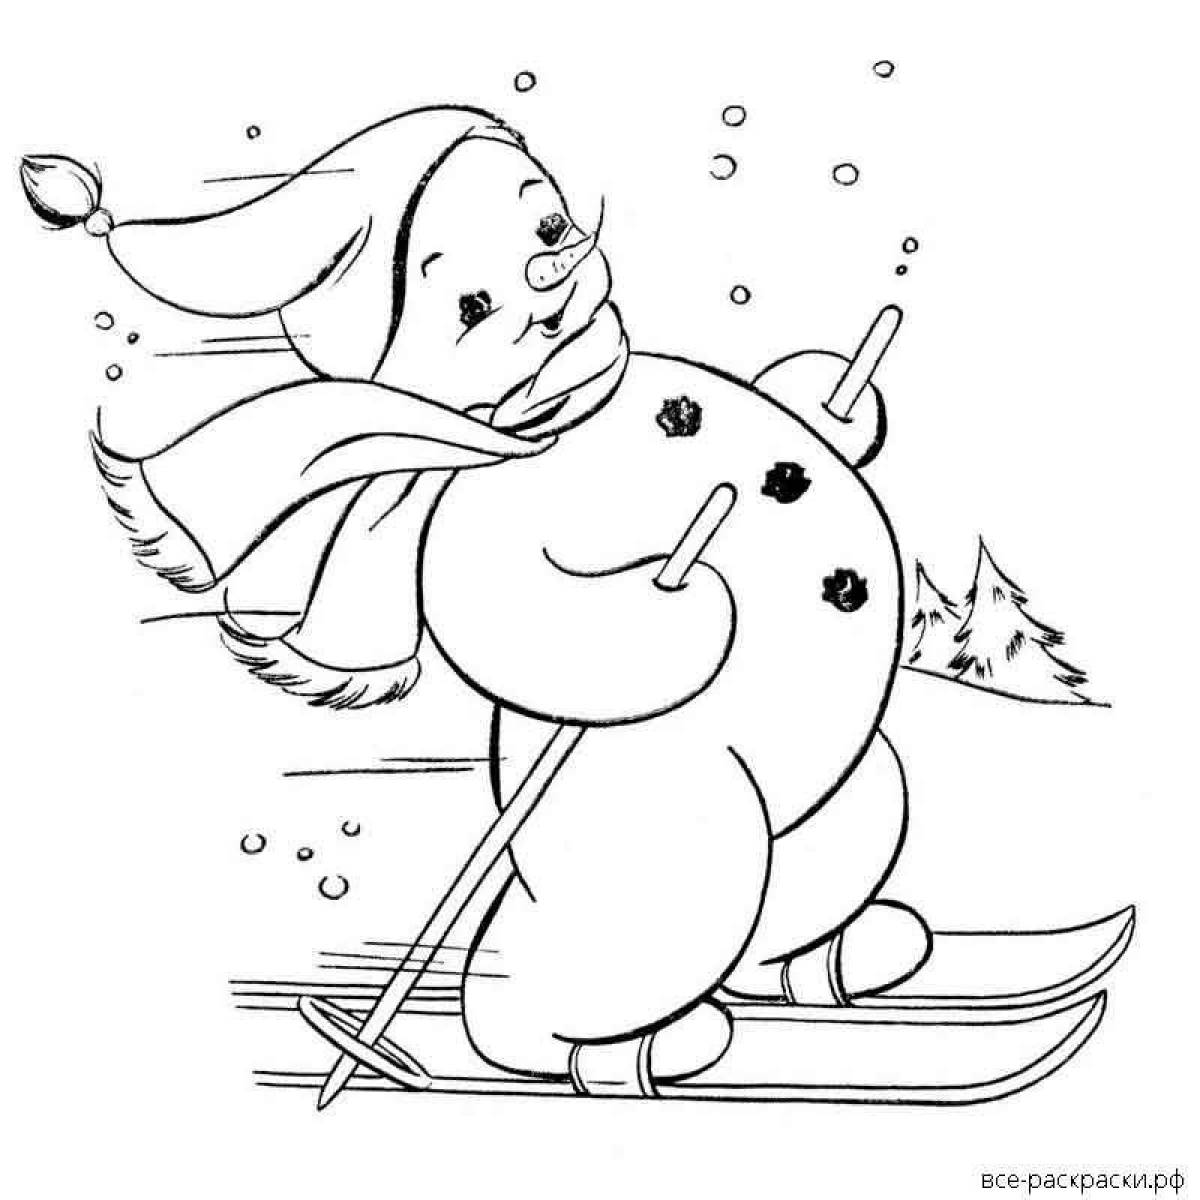 Snowman on skis #15